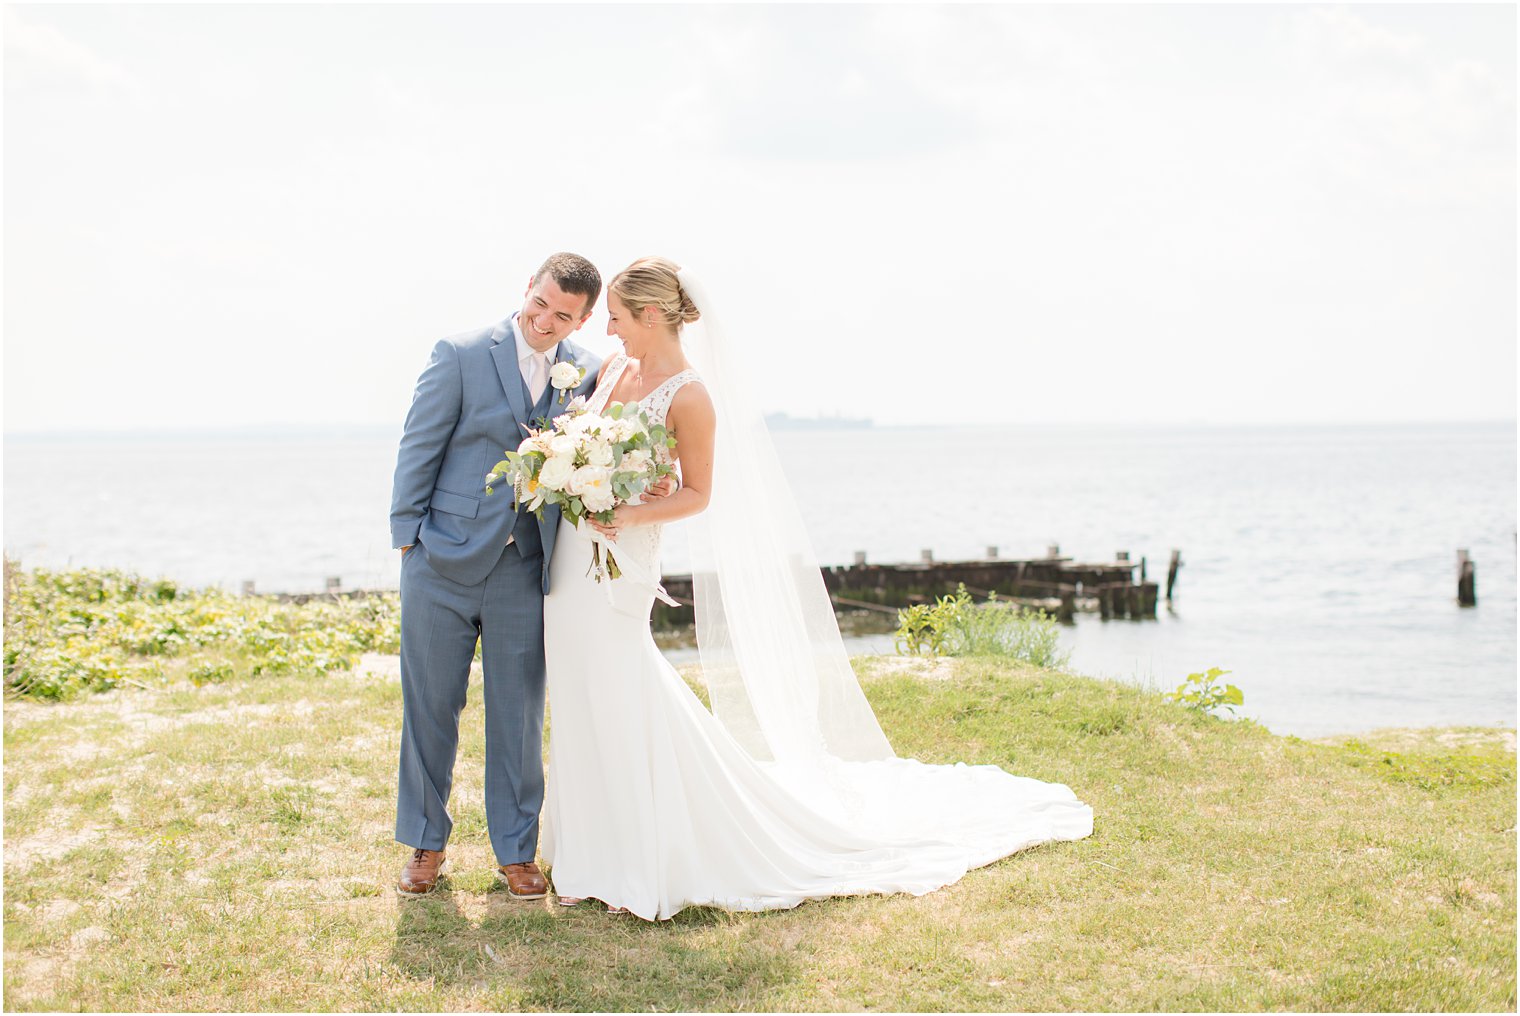 Sandy Hook Chapel wedding day with Idalia Photography